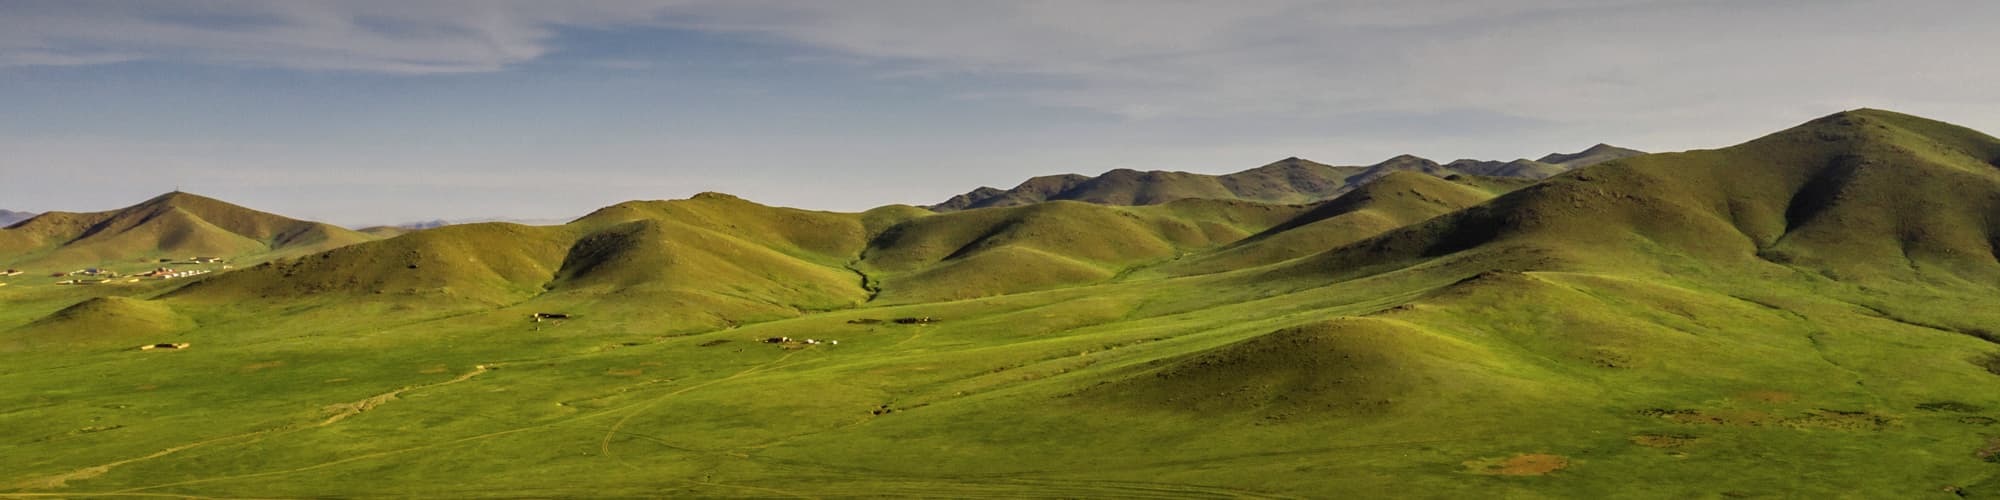 Trek Mongolie © Robert Churchill / iStock